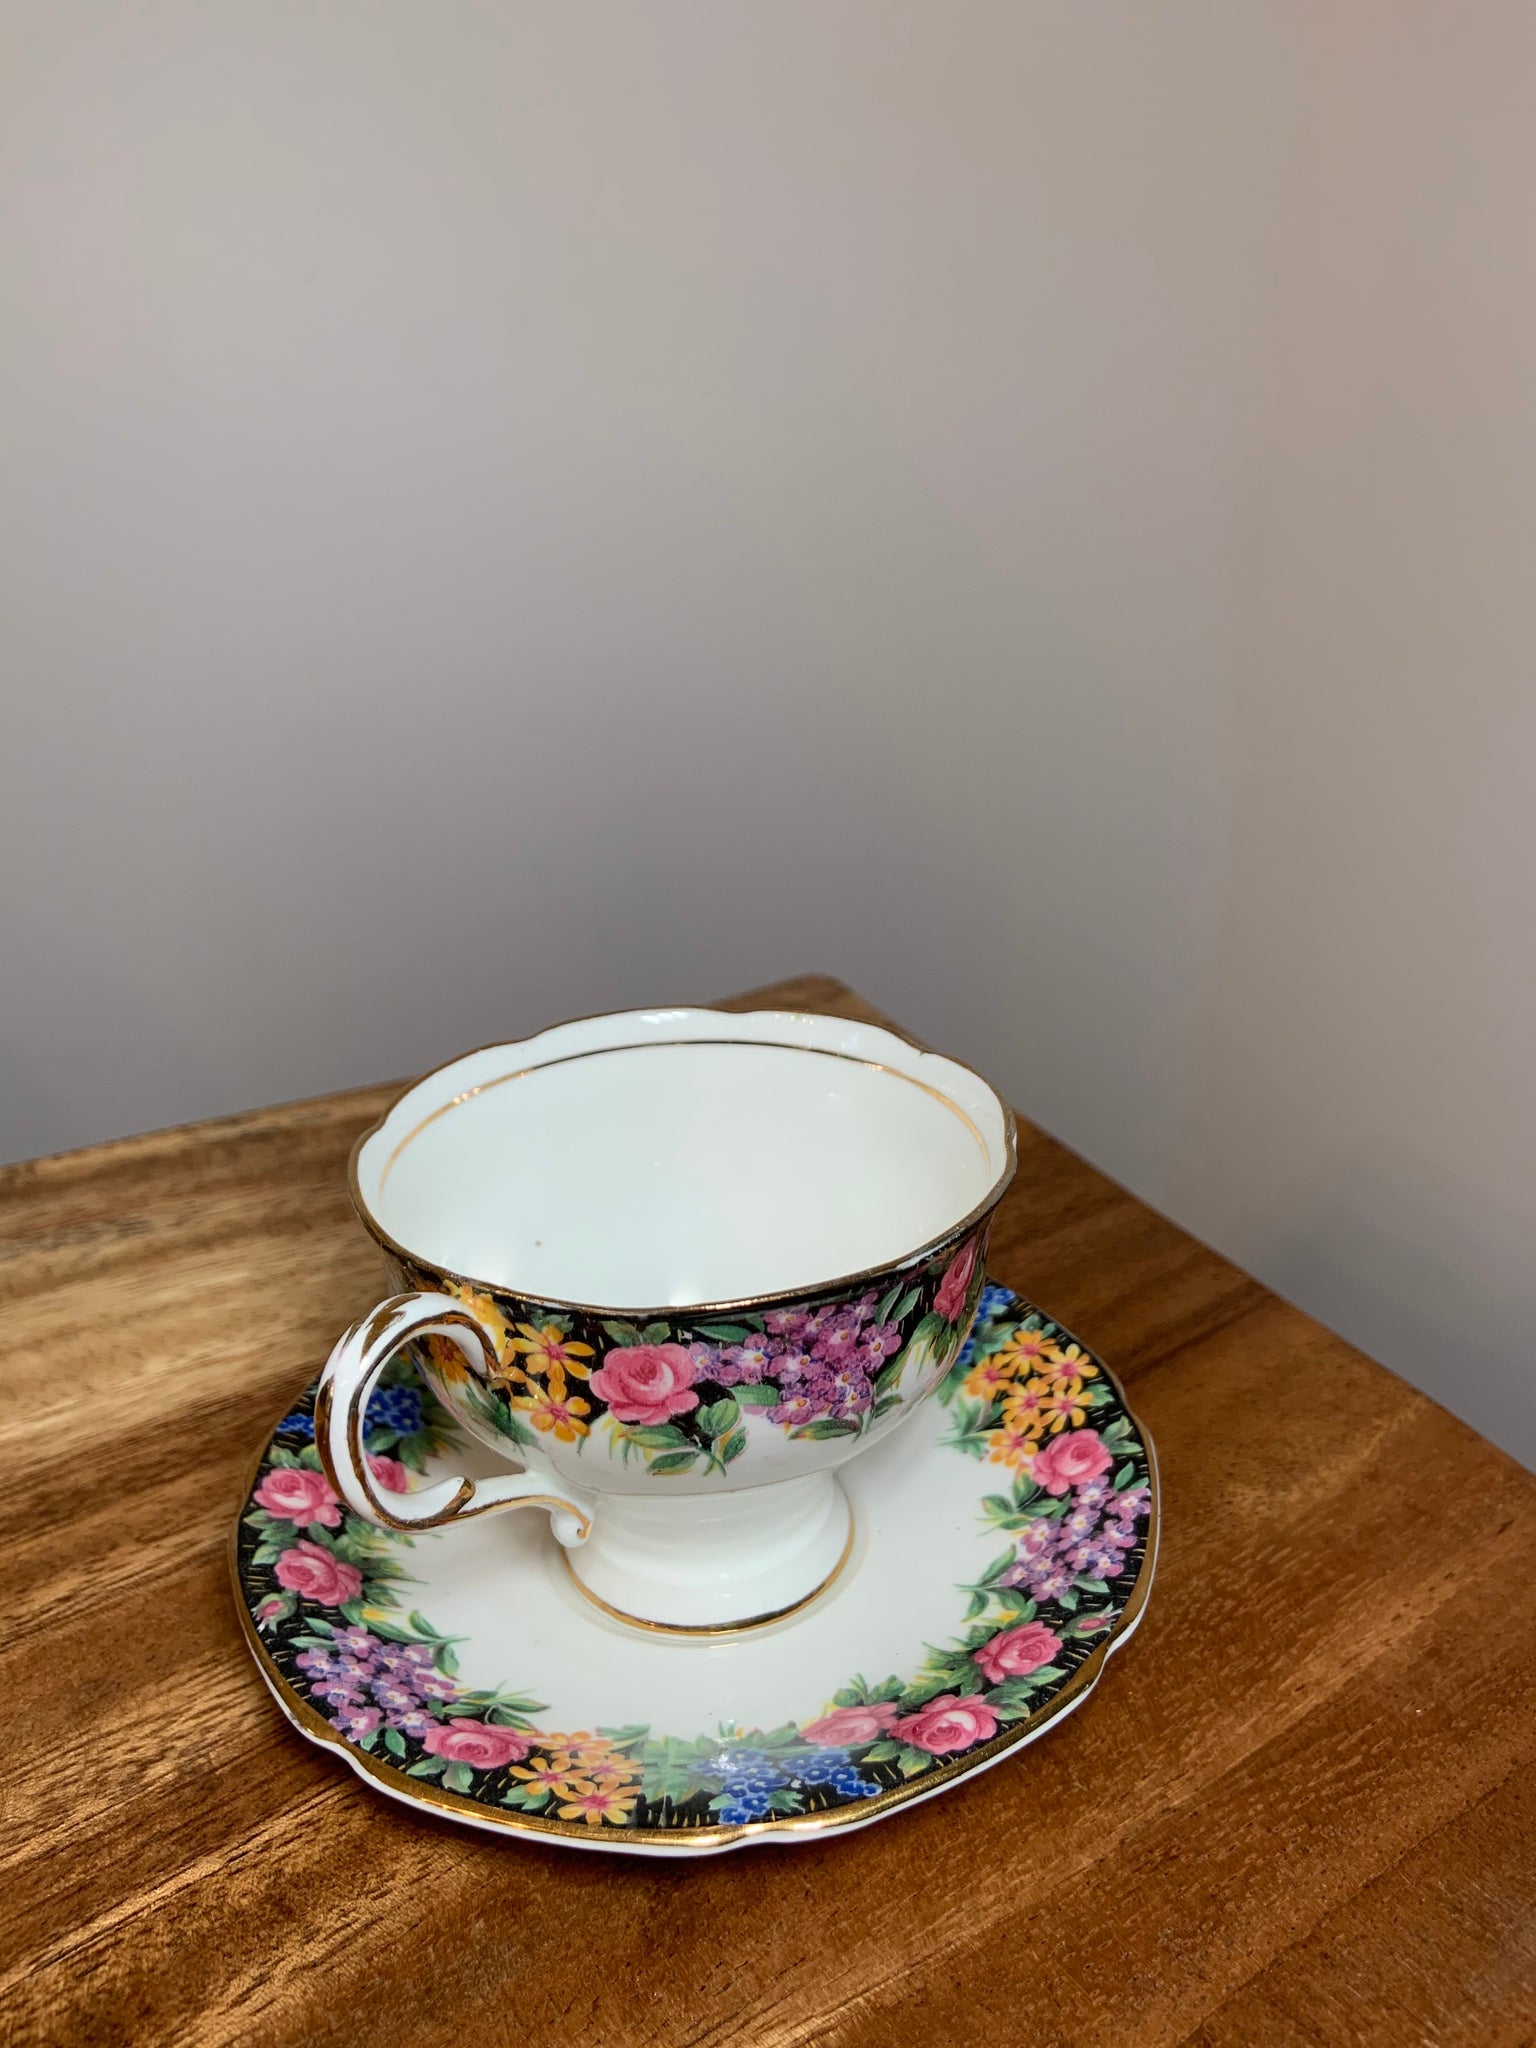 Paragon Old English Garden teacup & saucer